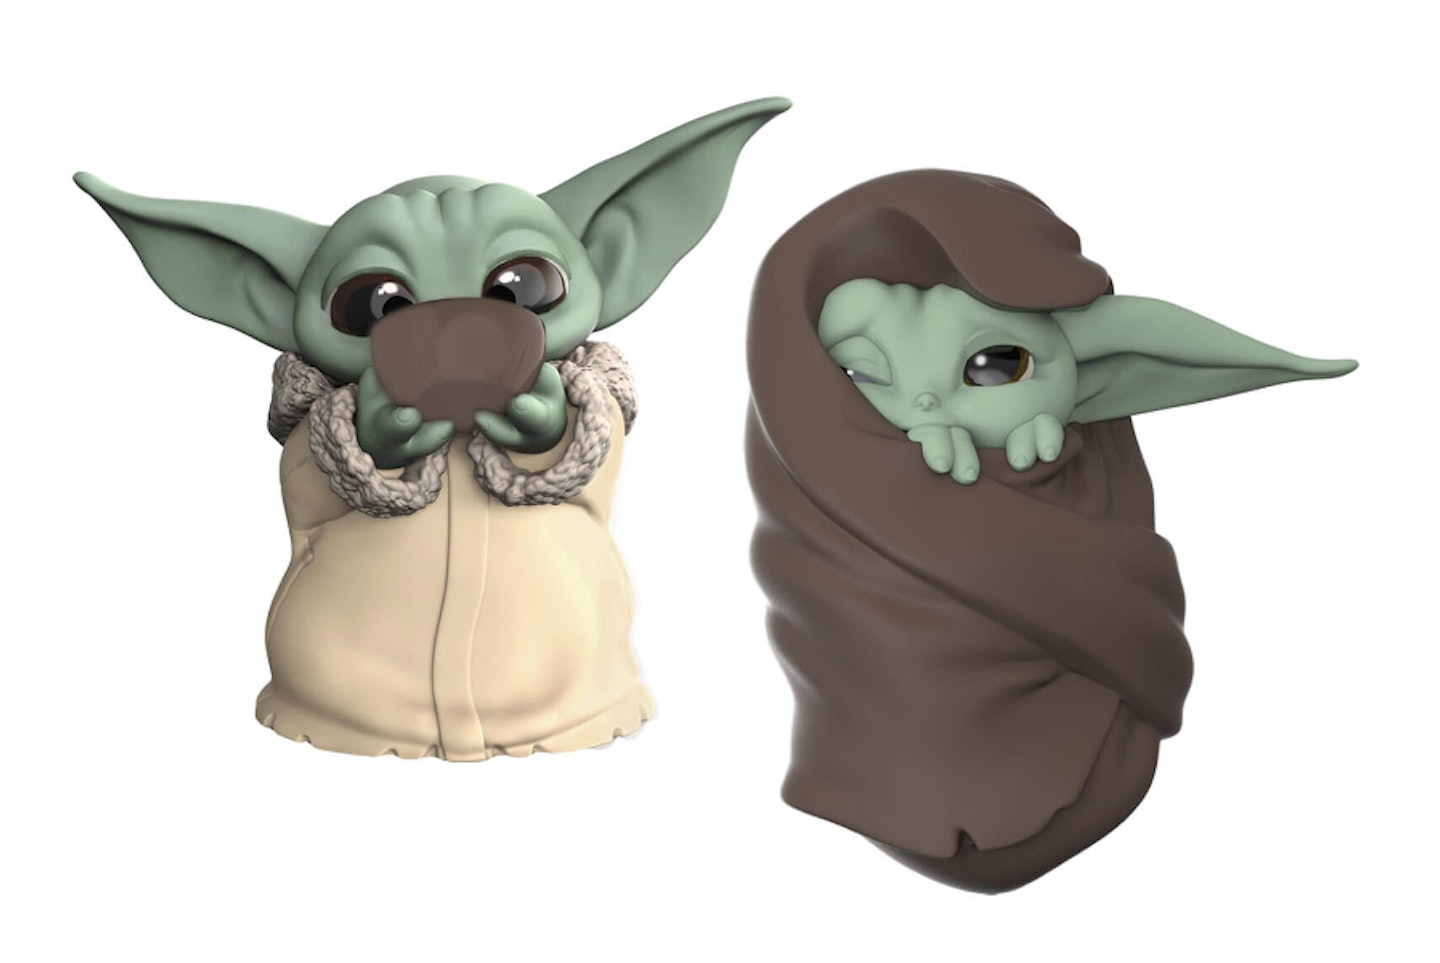 Hasbro Star Wars: The Mandalorian Baby Bounties "Soup and Blanket" Mini Figures